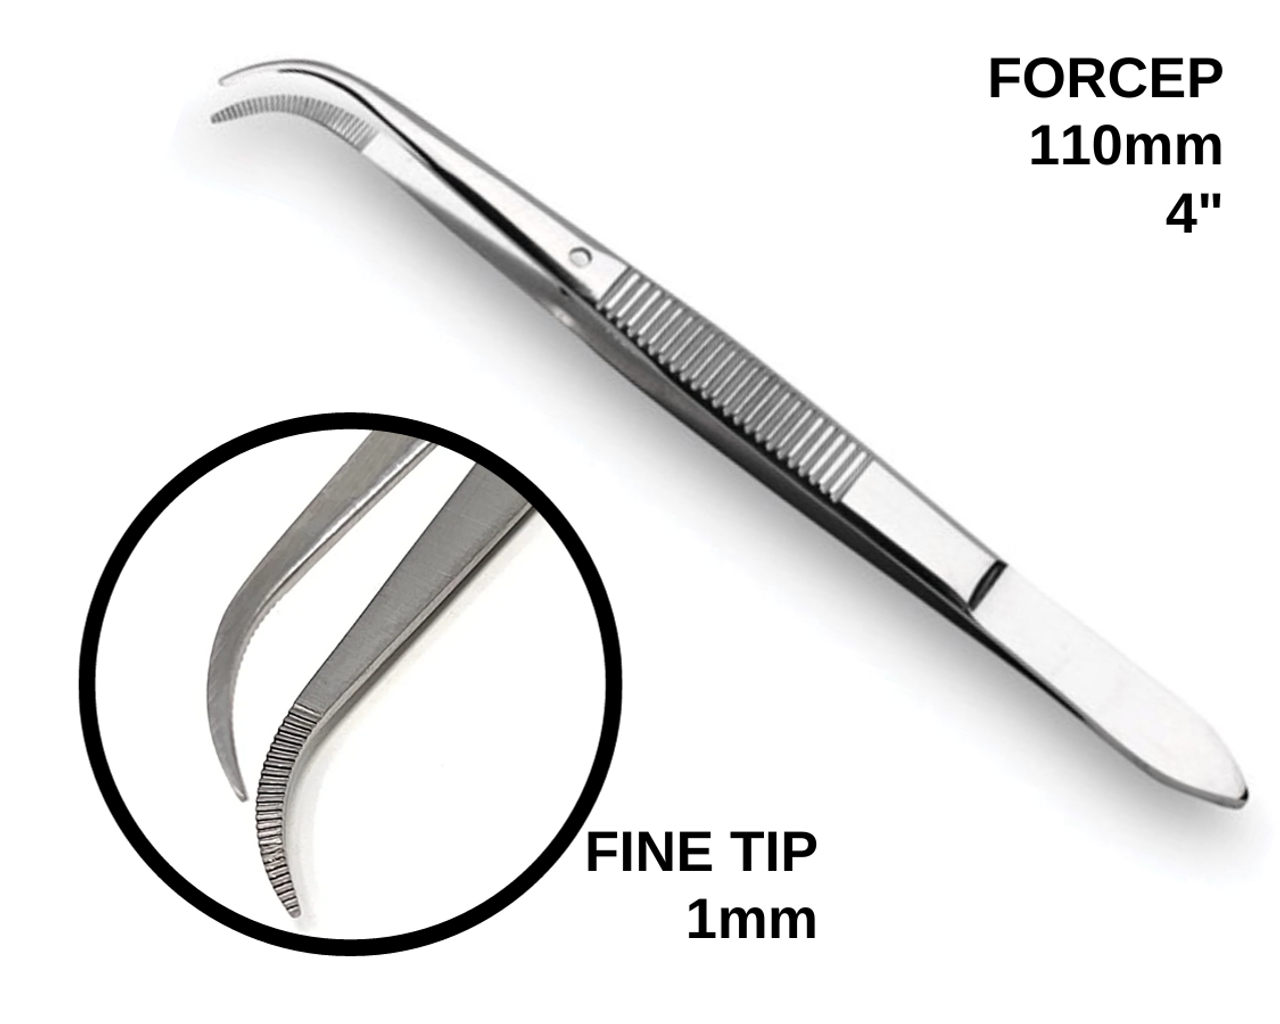 Medium Point Forceps, Tweezers, Curved, 4.5 (#4150)